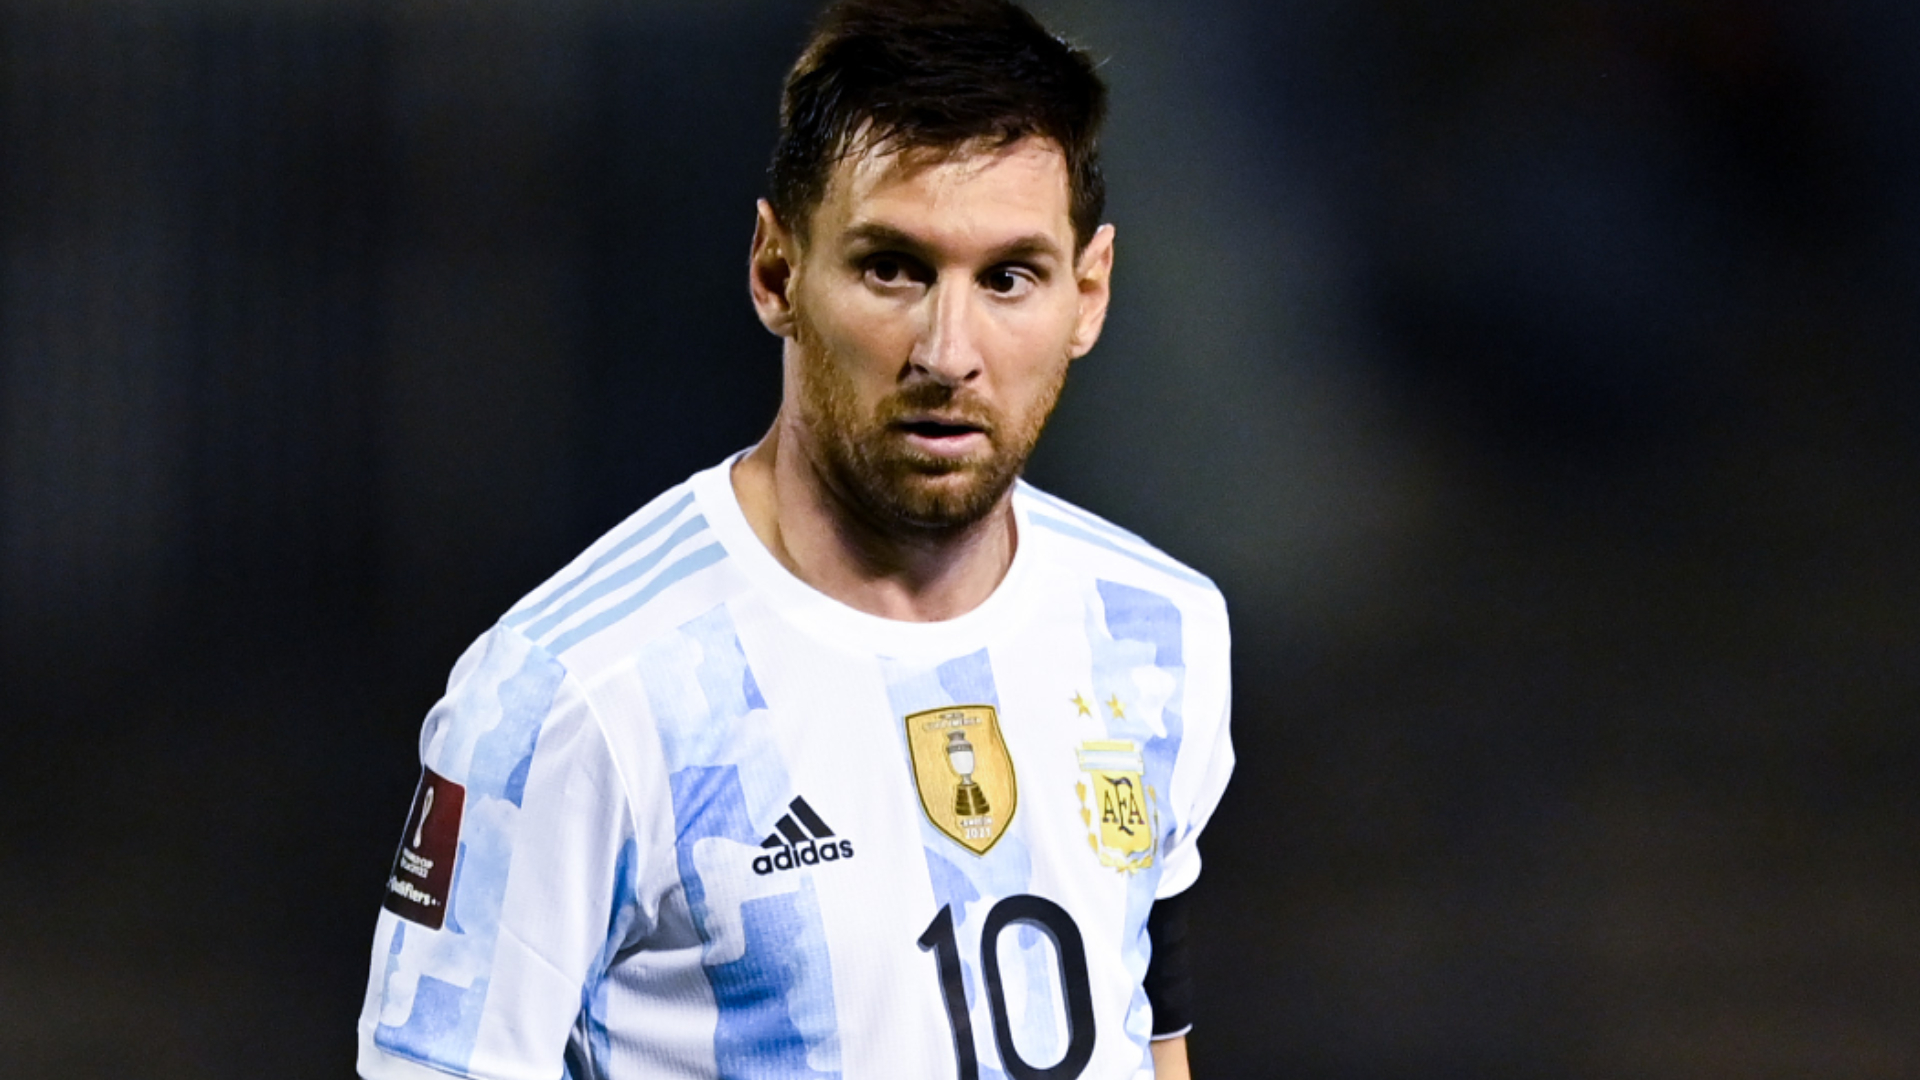 Messi despeja dudas antes del debut: "No tengo ningún problema"